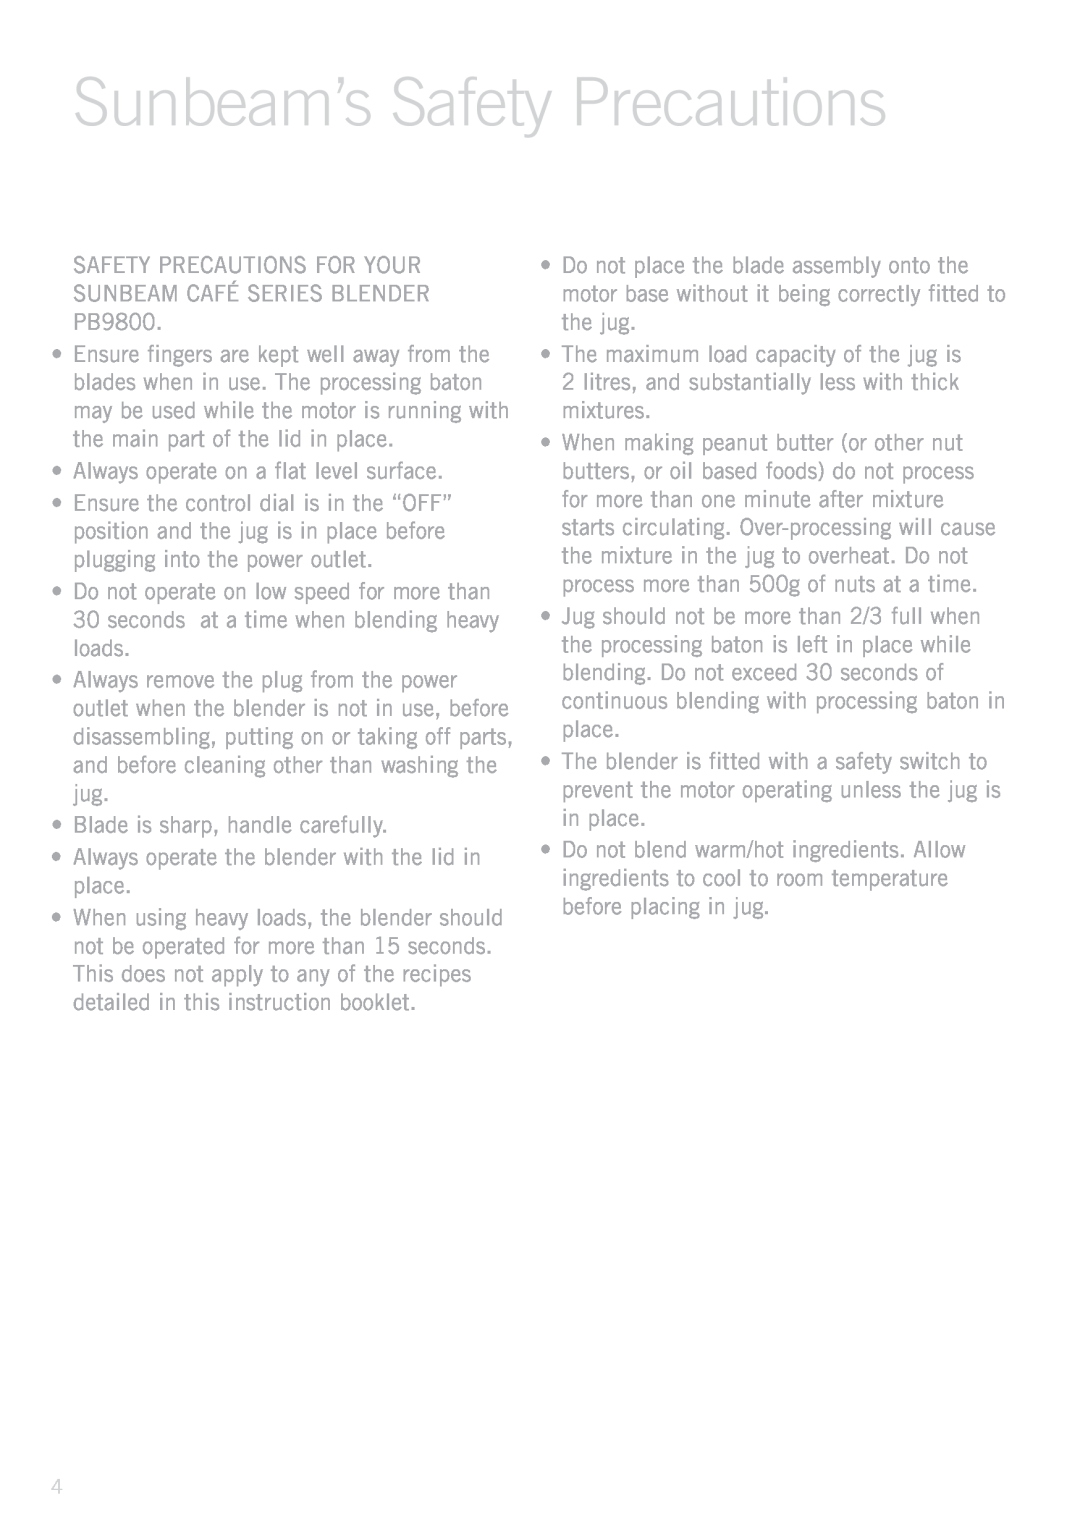 Sunbeam PB9800 manual Sunbeam’s Safety Precautions 